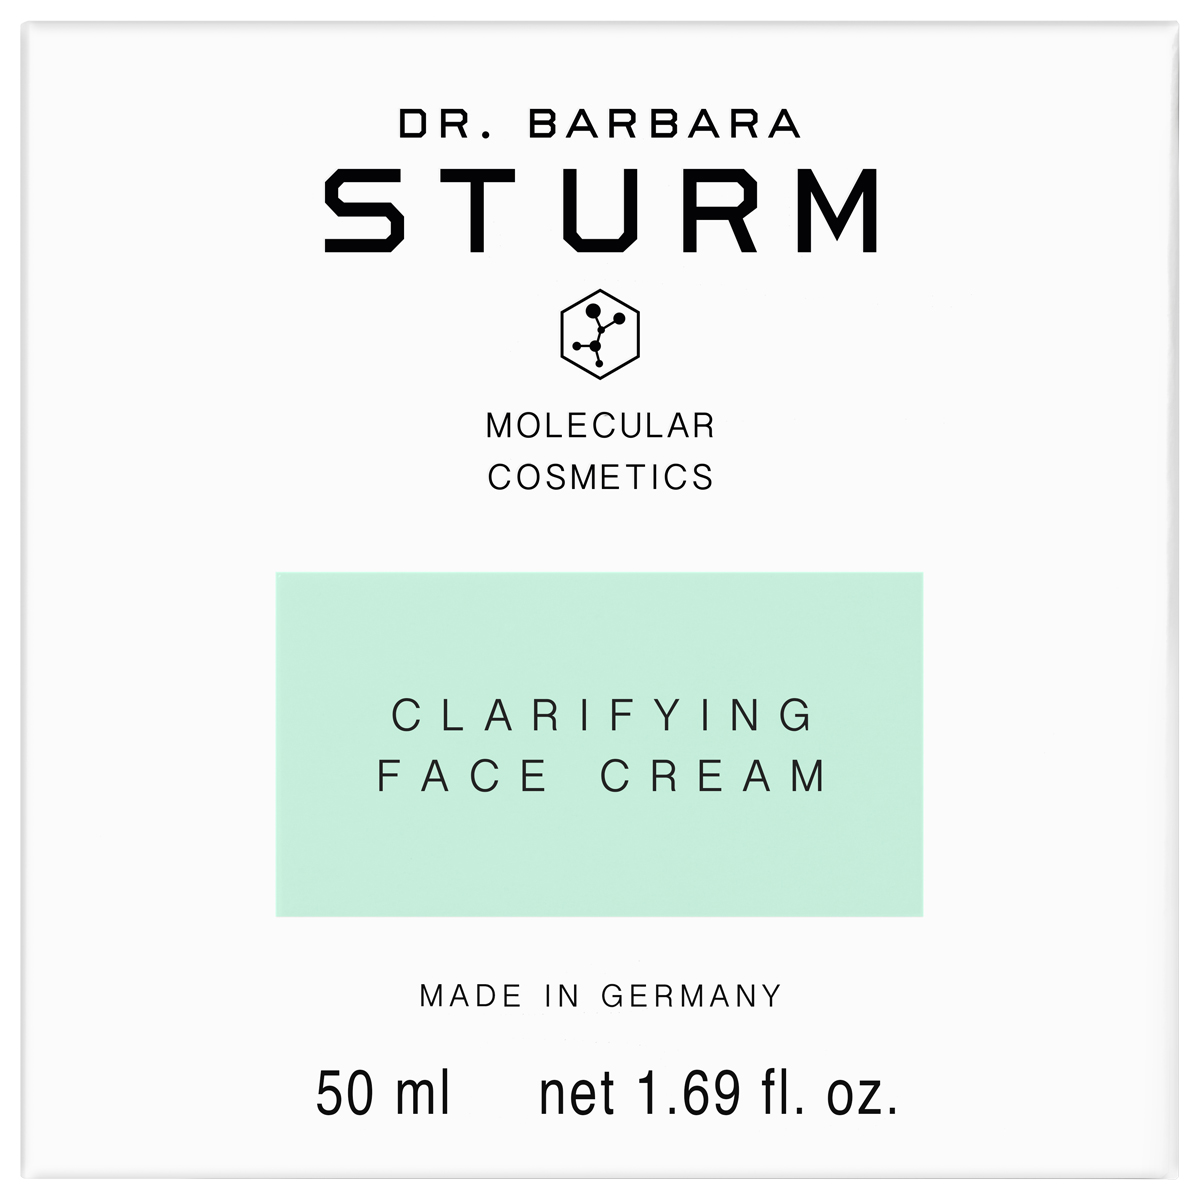 Dr. Barbara Sturm - Clarifying Face Cream